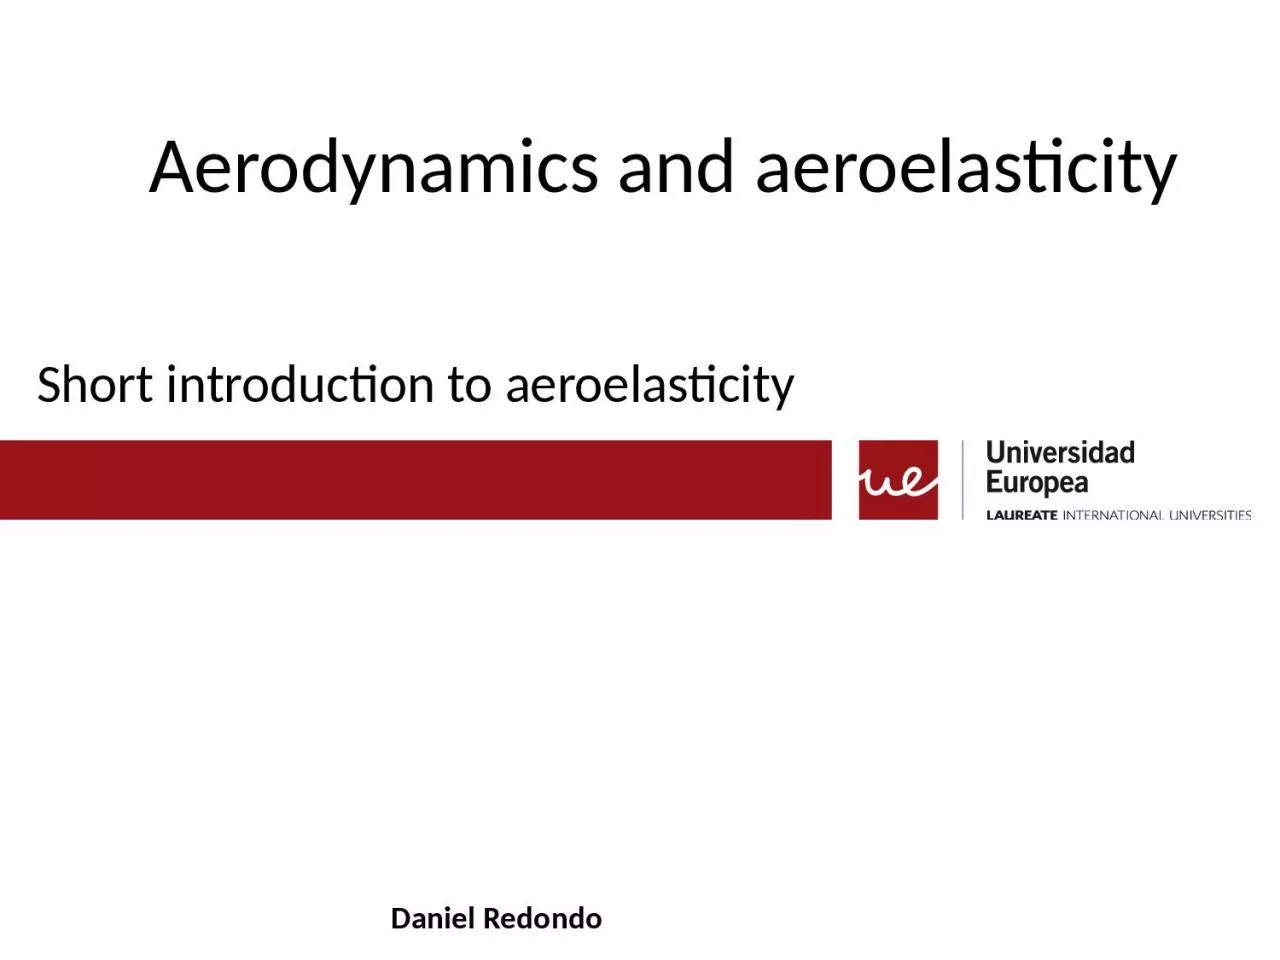 Short introduction to  aeroelasticity